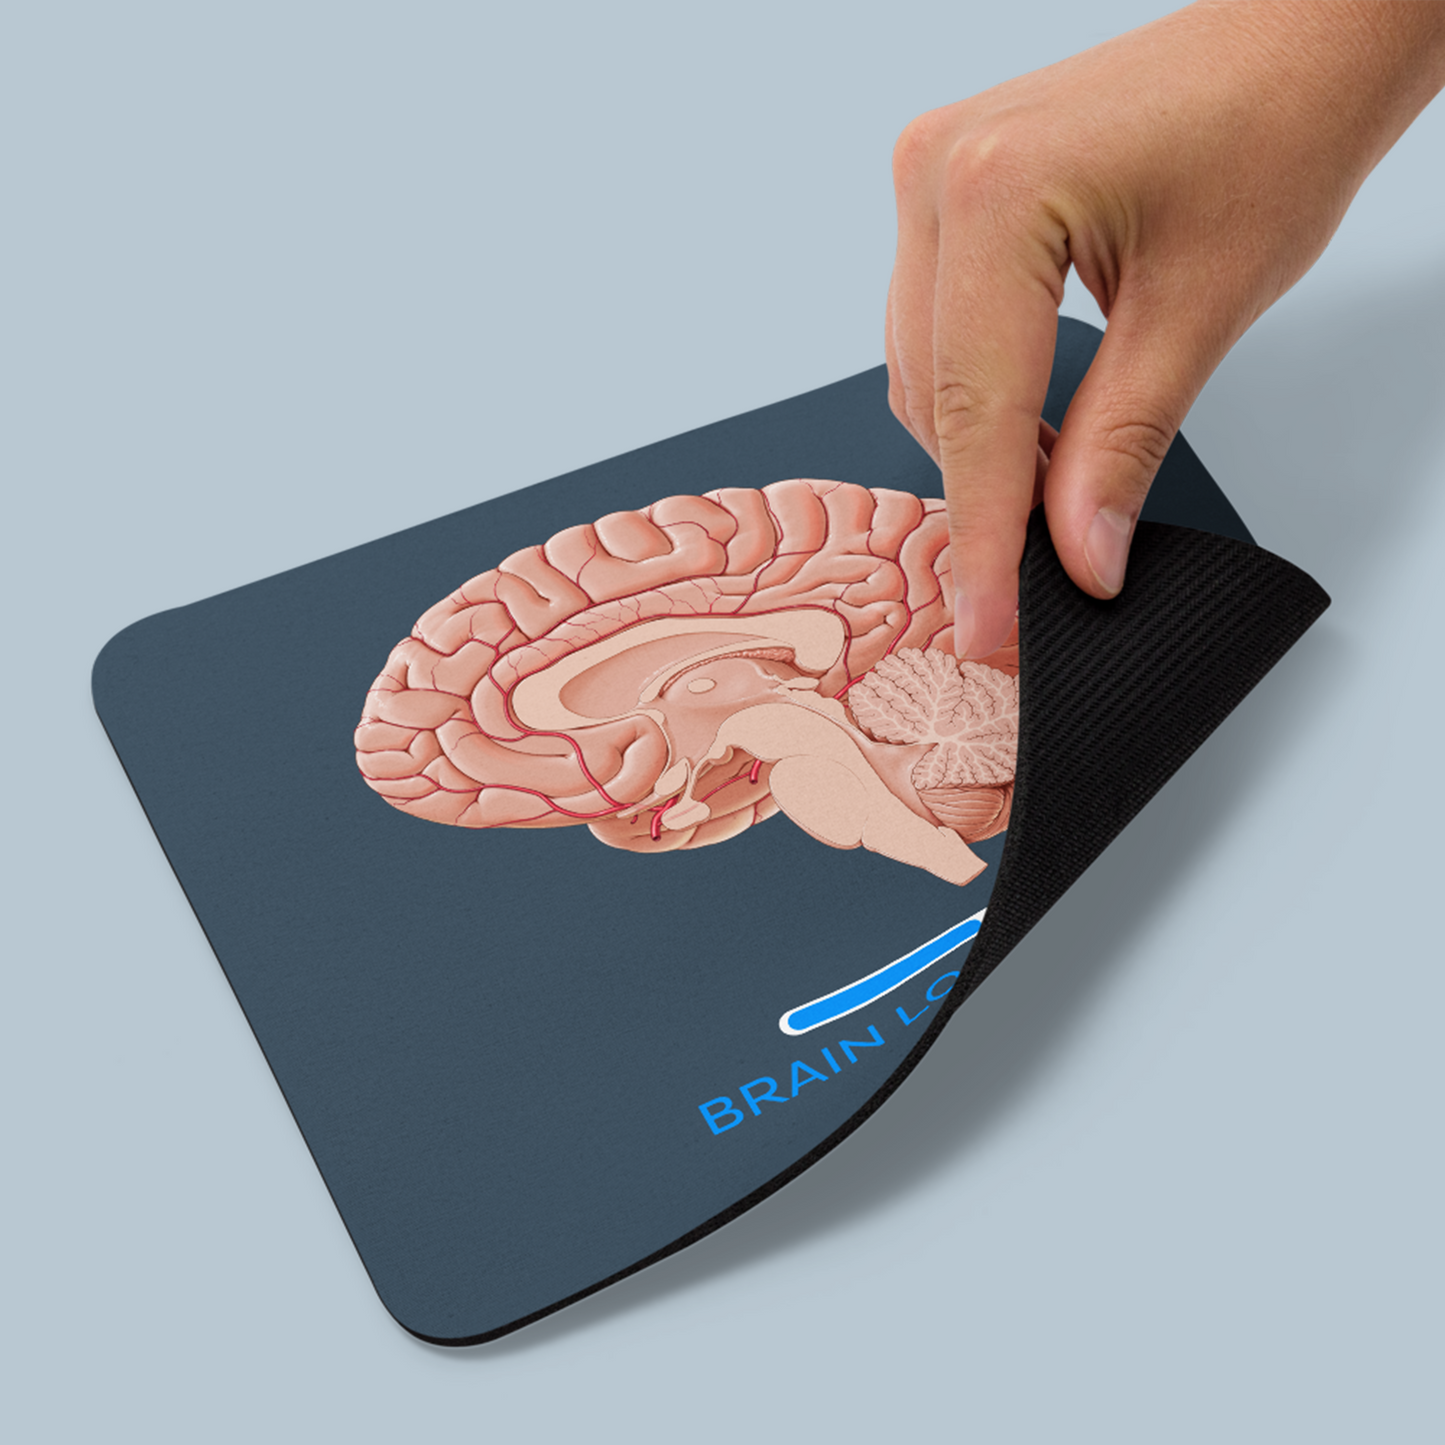 Brain Loading - Mouse pad